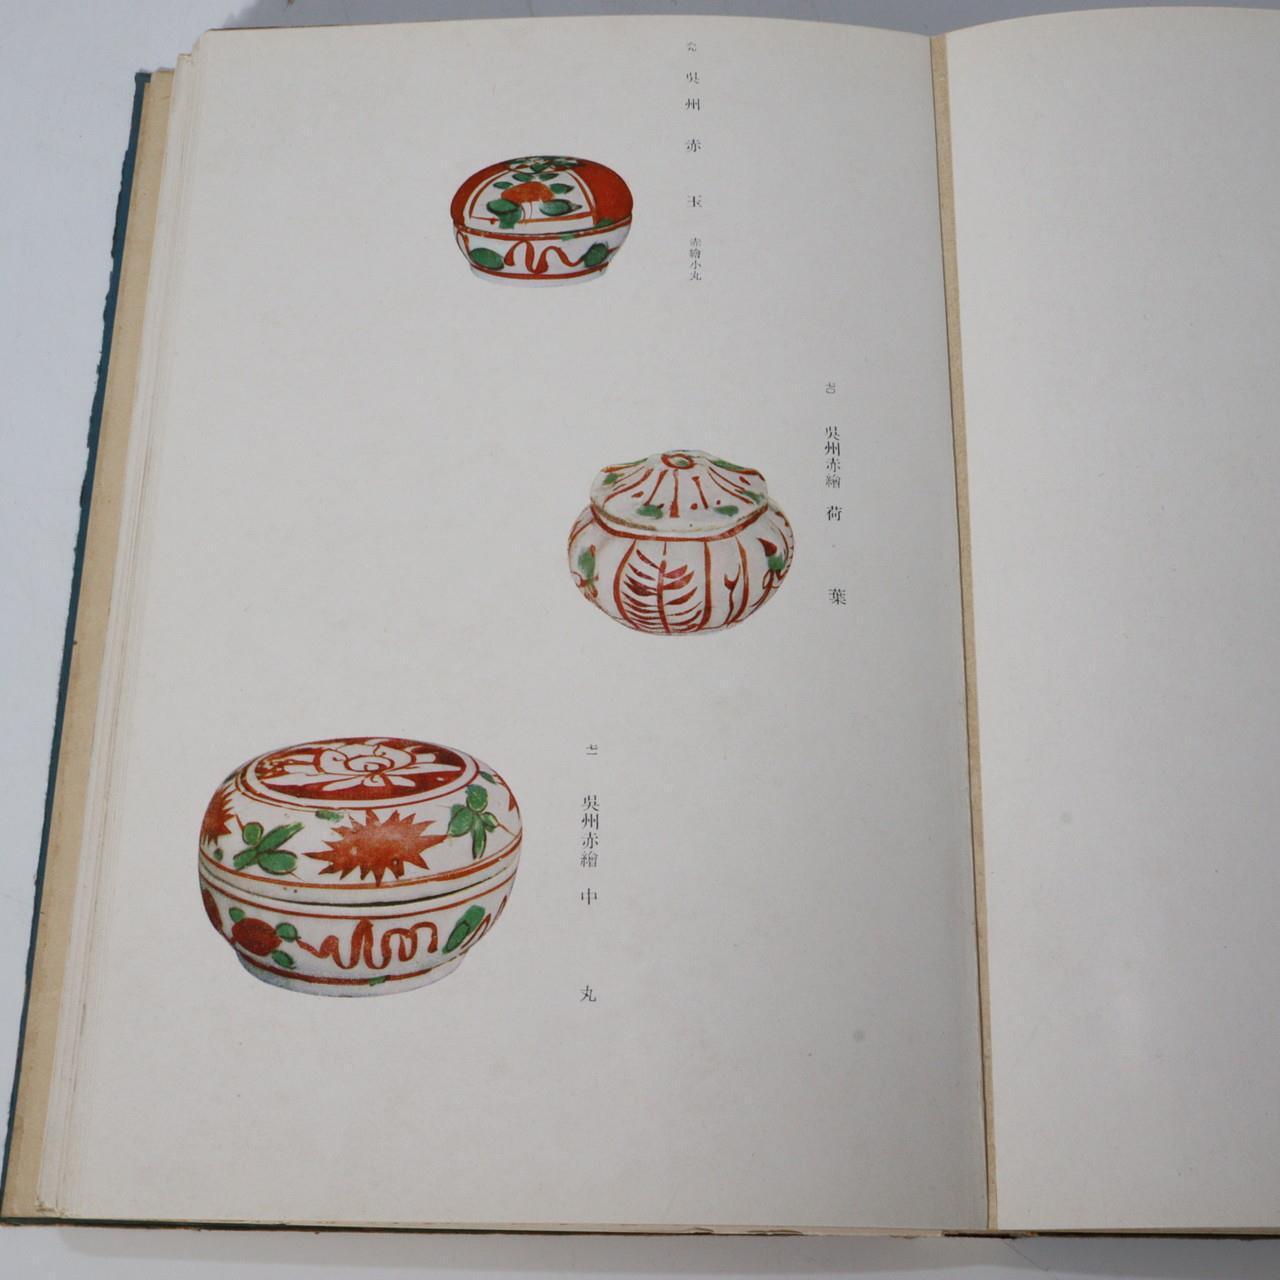 Katamono Kogo Incense container Ceramic pottery Japanese Two Books